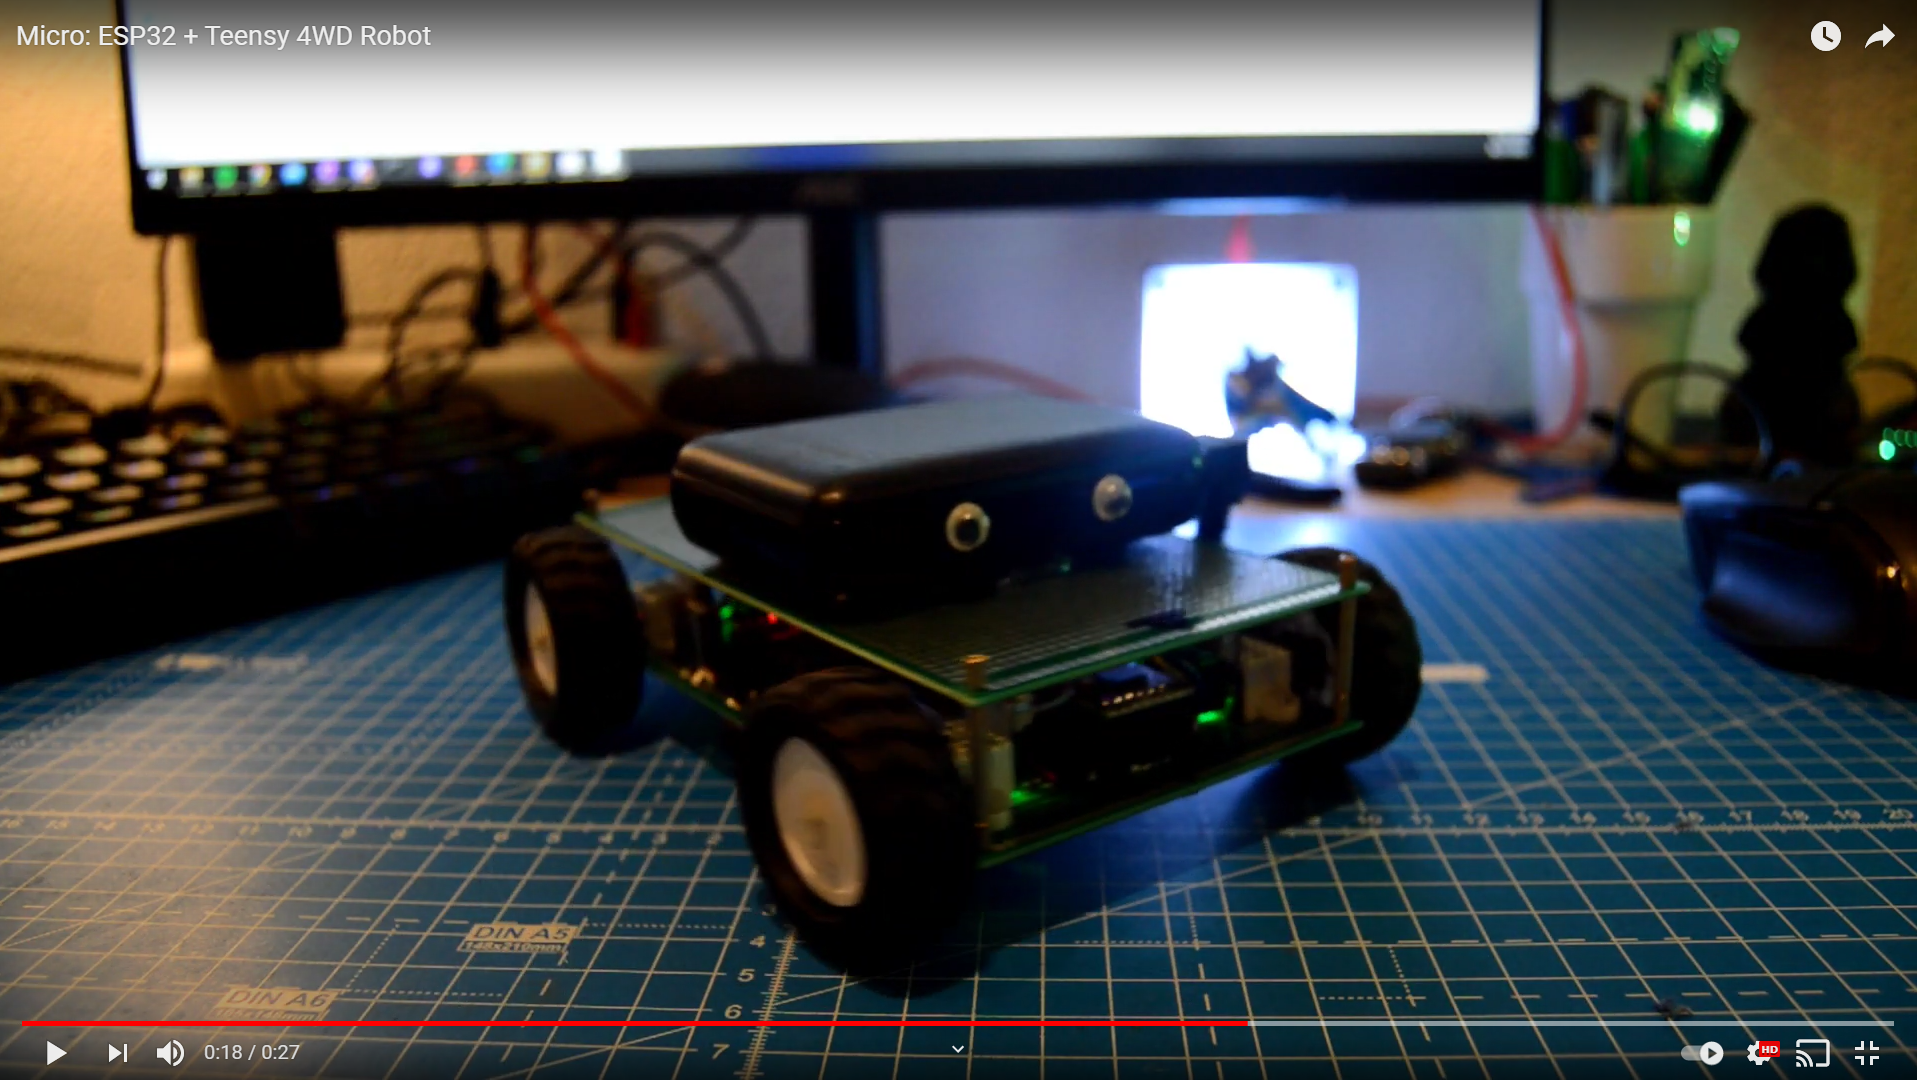 Micro: ESP32 + Teensy 4WD Robot